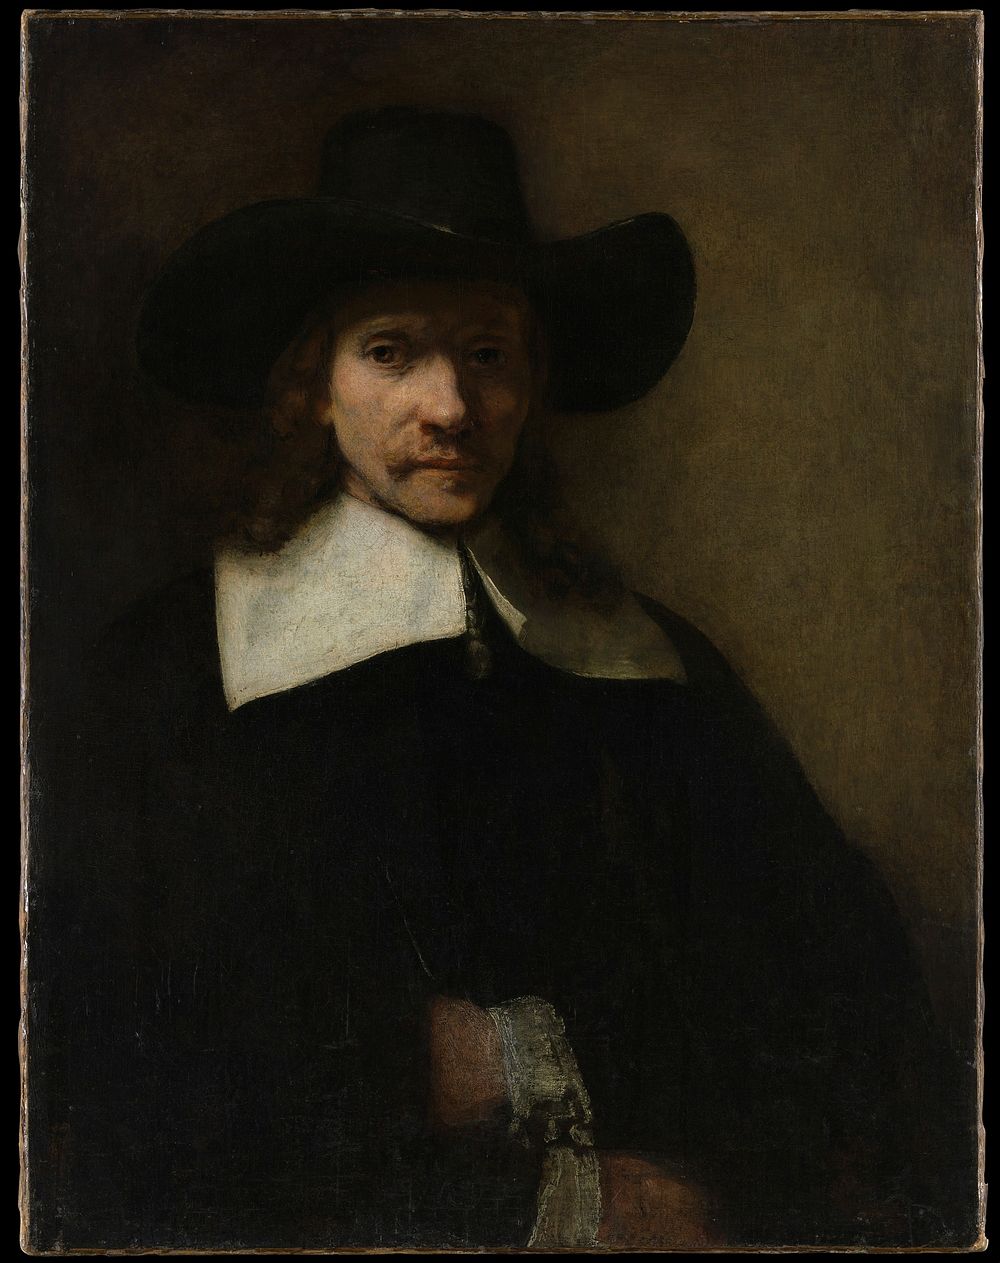 Portrait of a Man by Rembrandt van Rijn